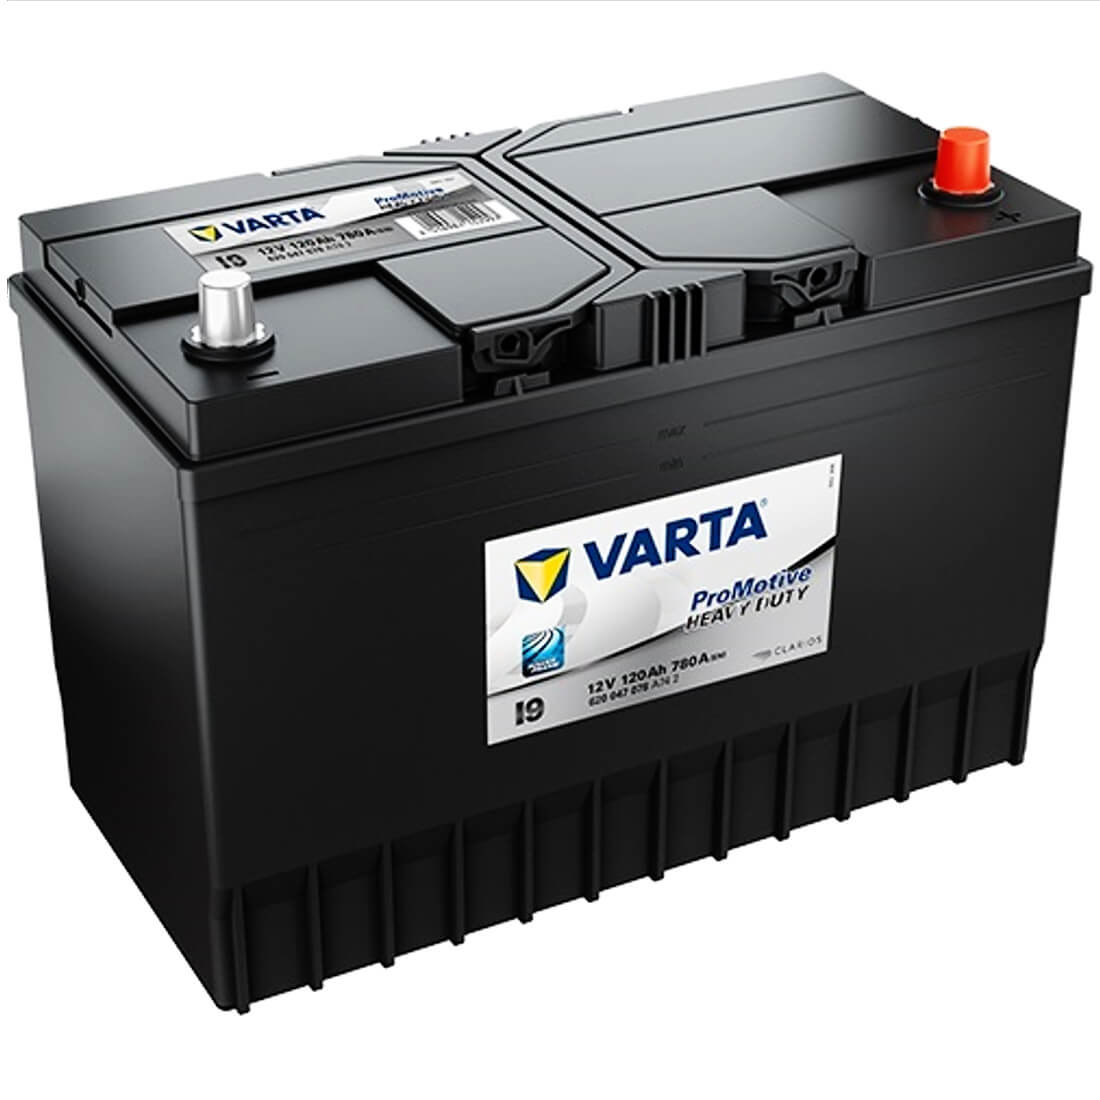 Varta I9 Promotive Heavy Duty 12V 120Ah 780A/EN